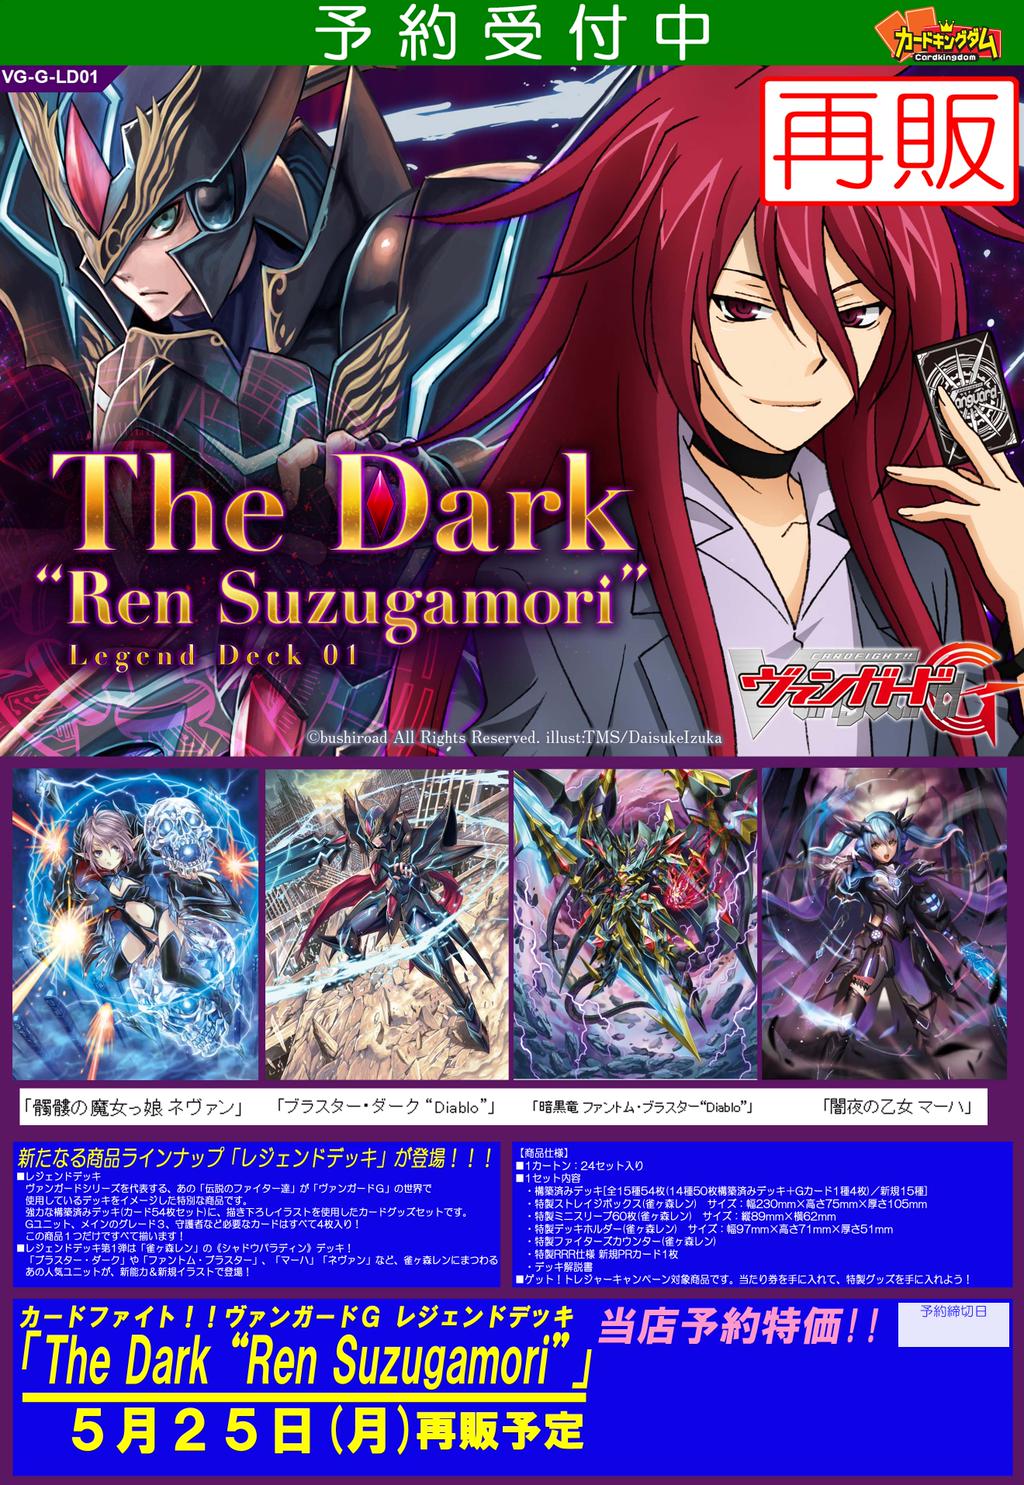 VG】「レジェンドデッキ The Dark“Ren Suzugamori”」再販は5/25らしい